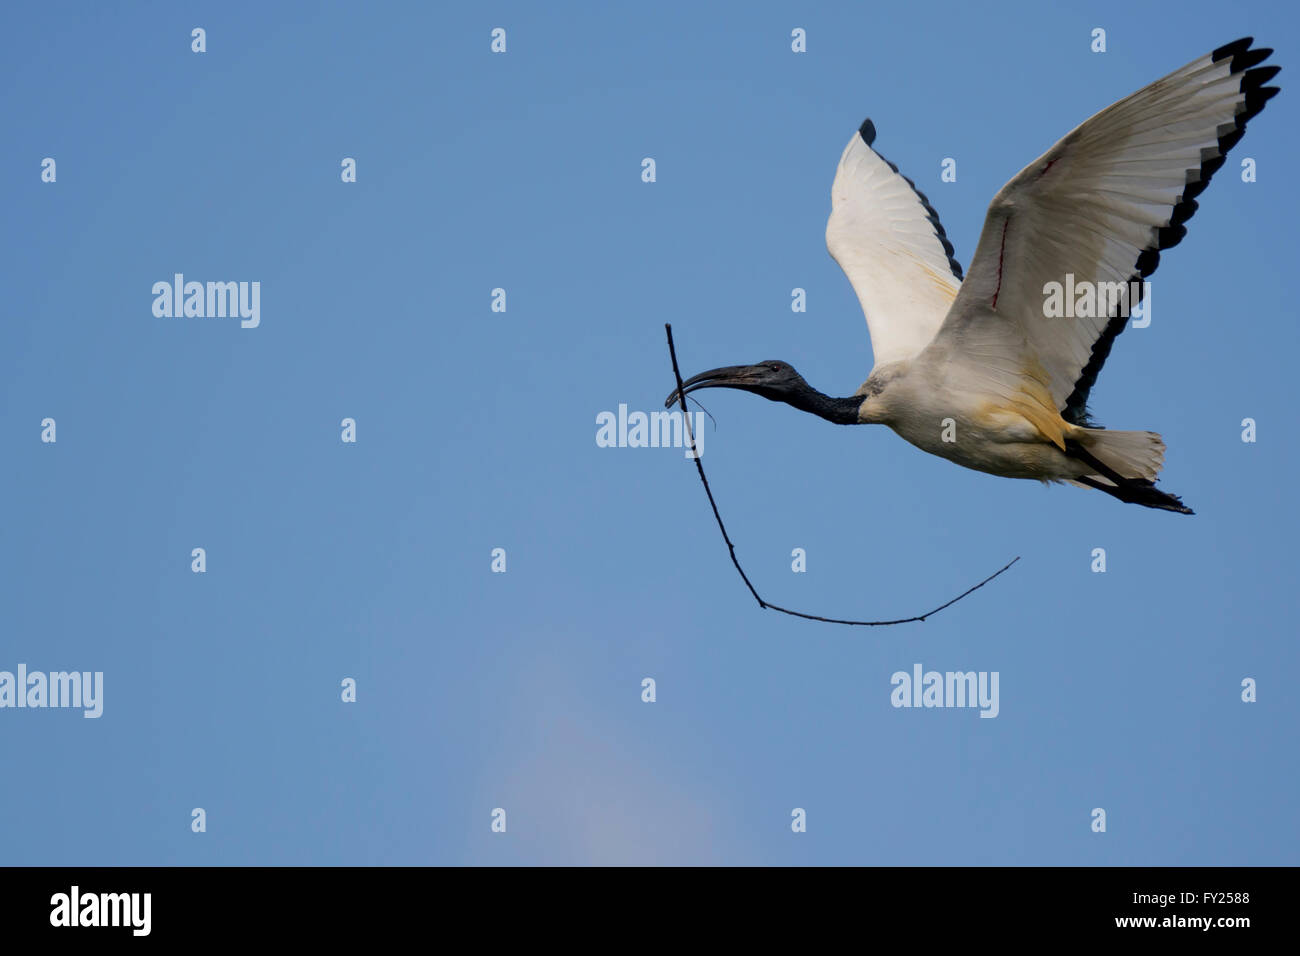 Sacred ibis bird carrying twig nesting material Stock Photo